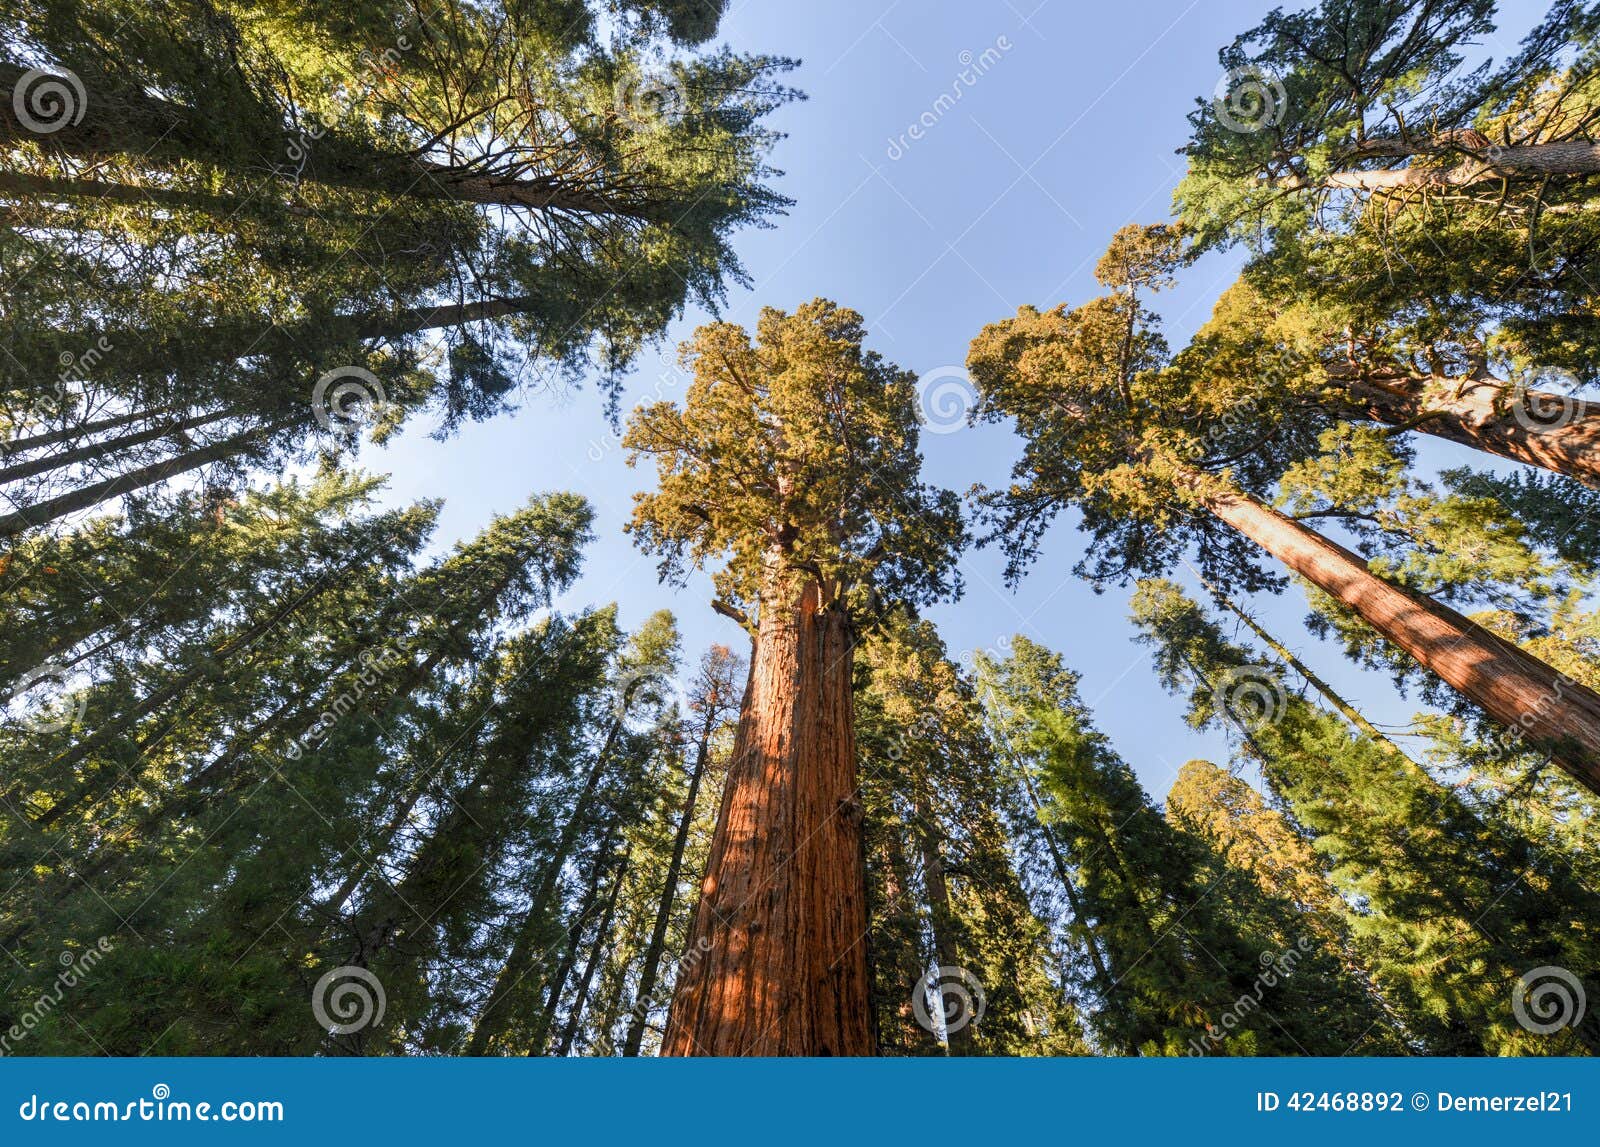 general sherman sequoia tree